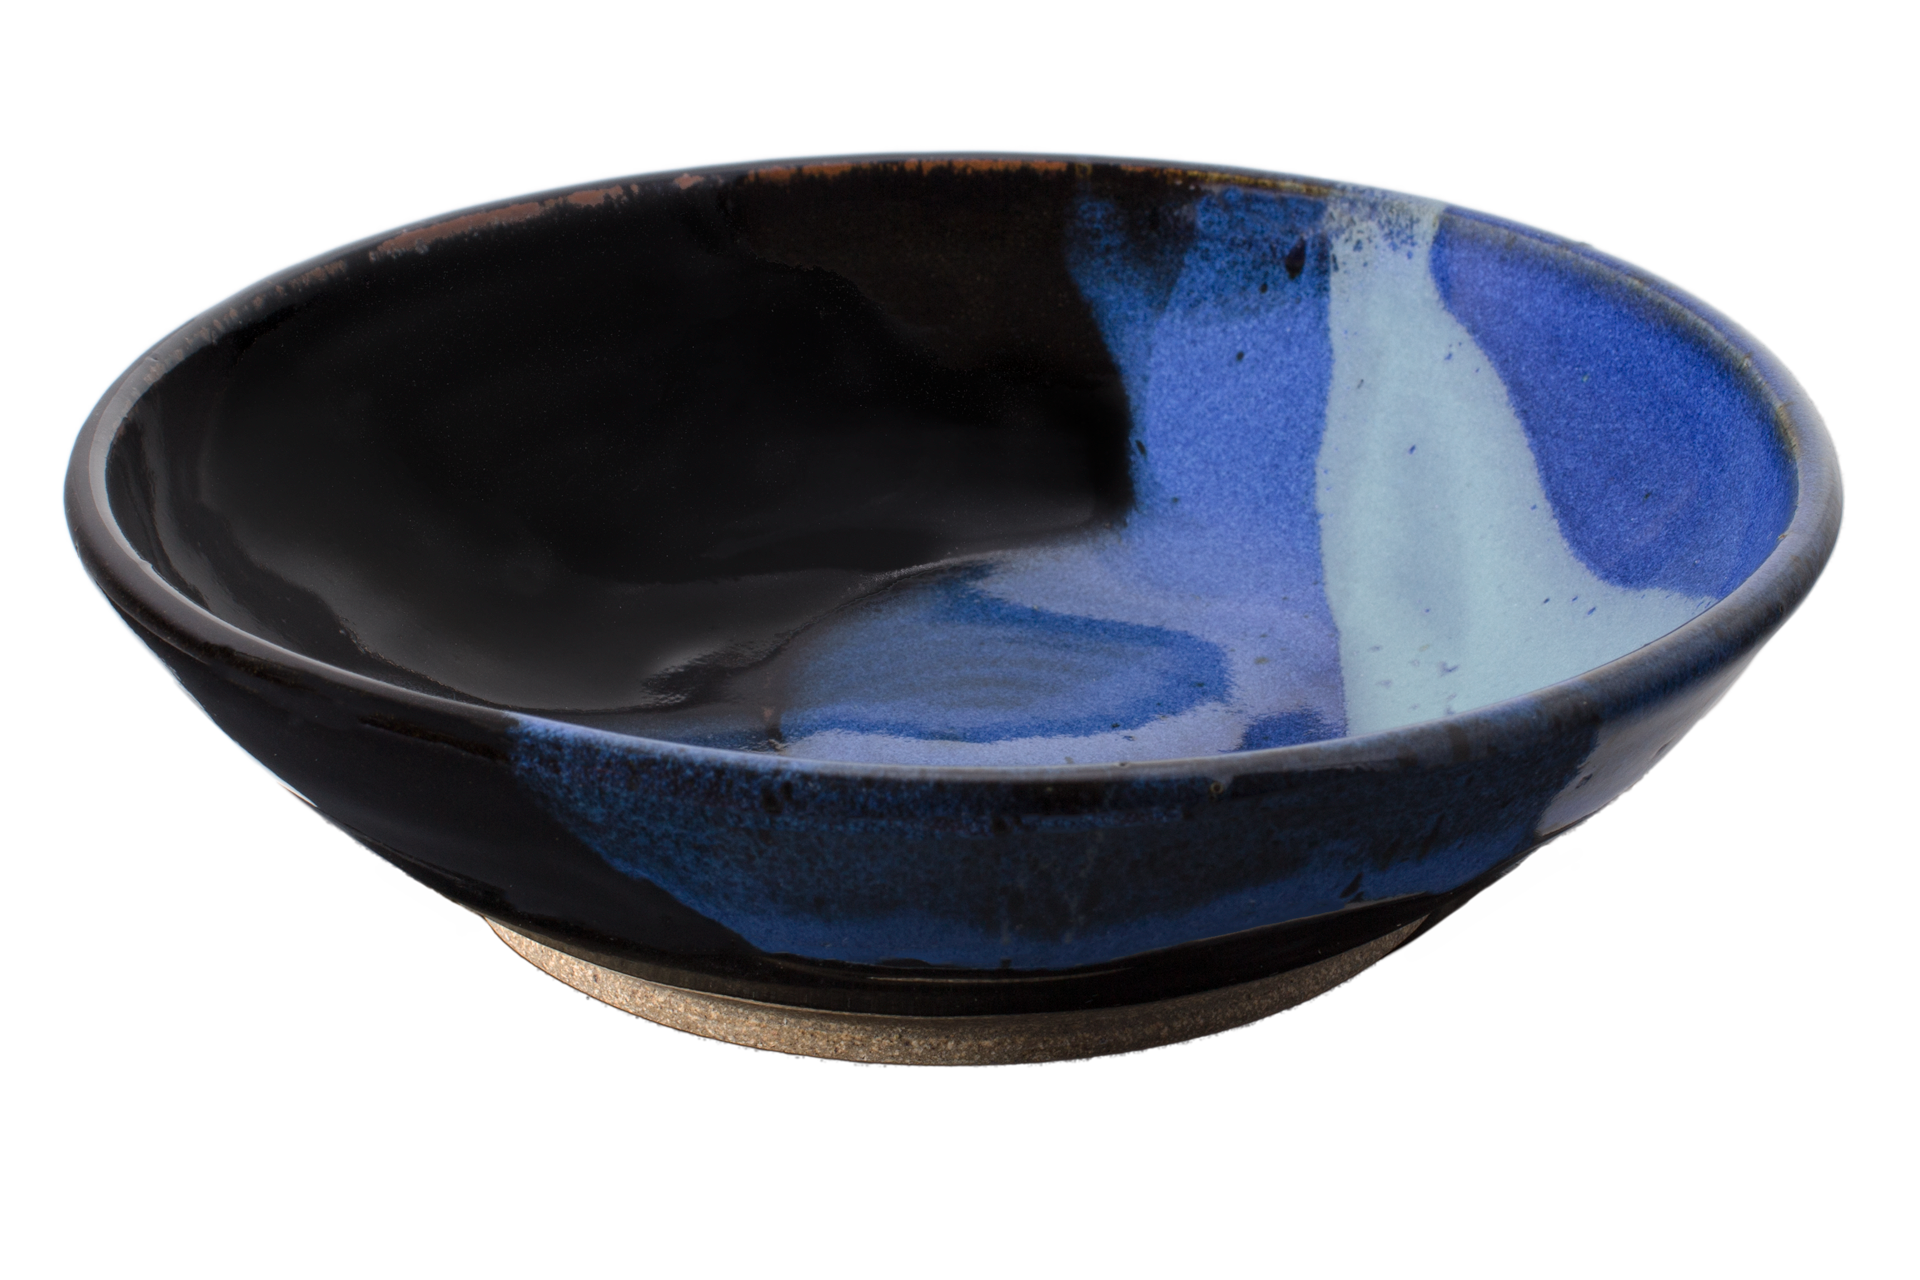 Handmade pottery bowl prairie. Dish clipart blue plate